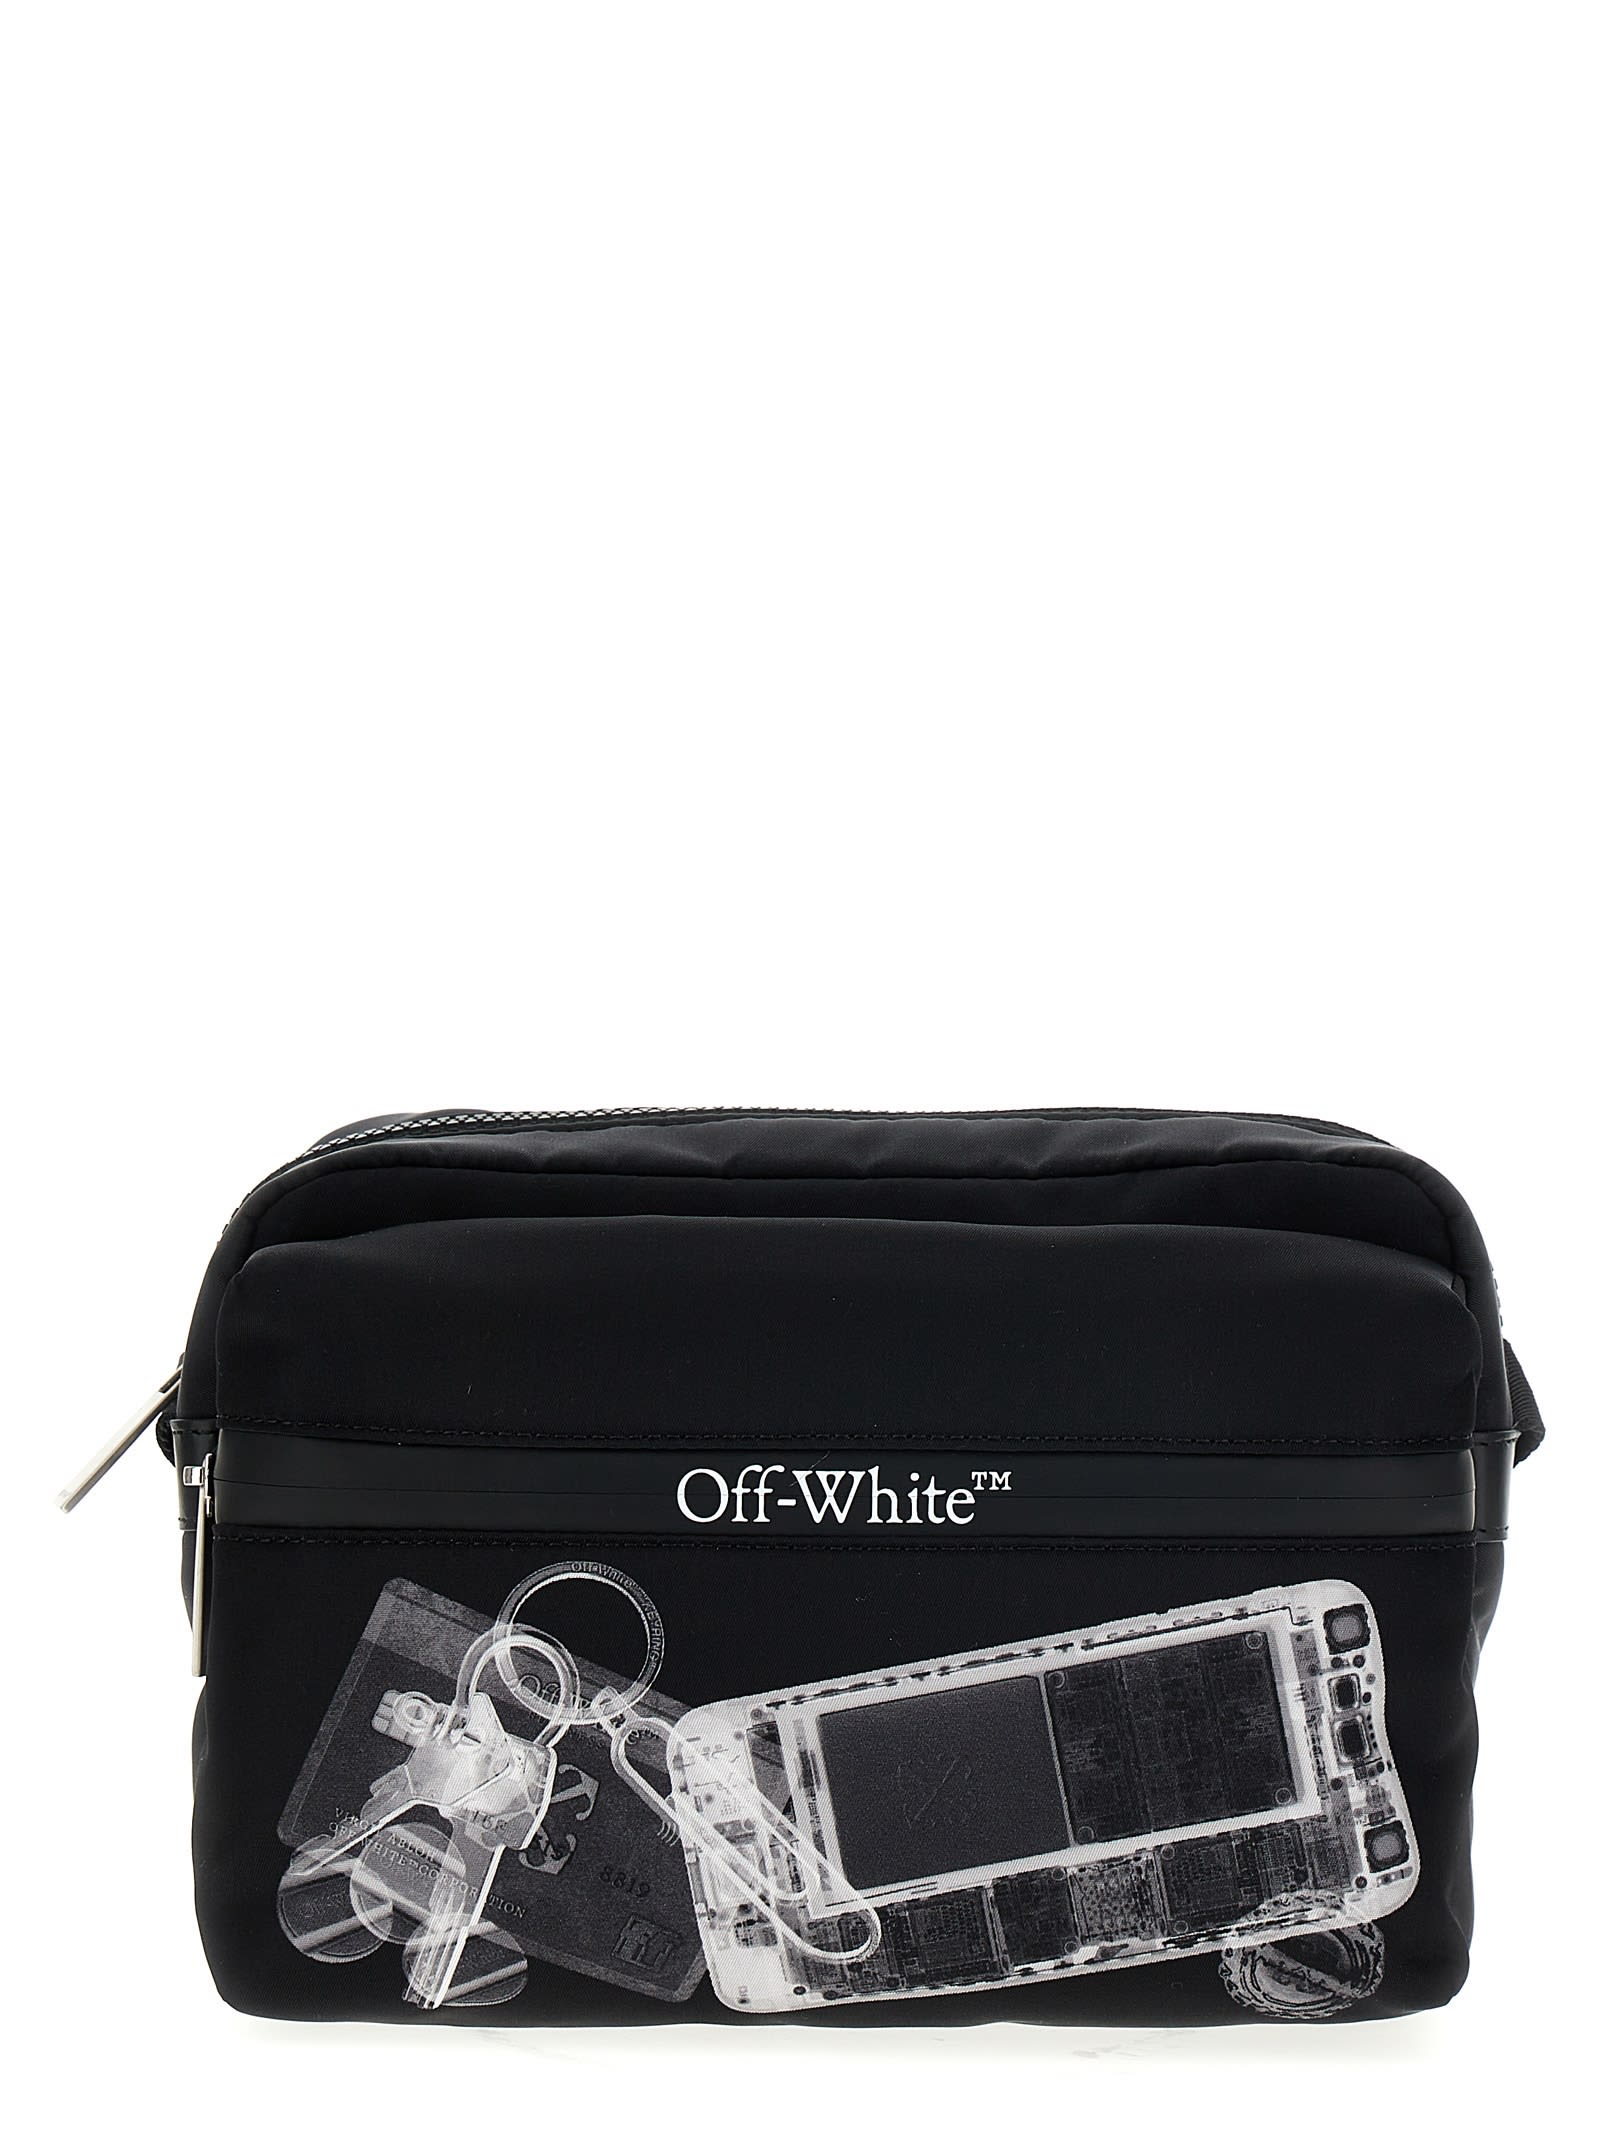 Off-White x-ray Crossbody Bag